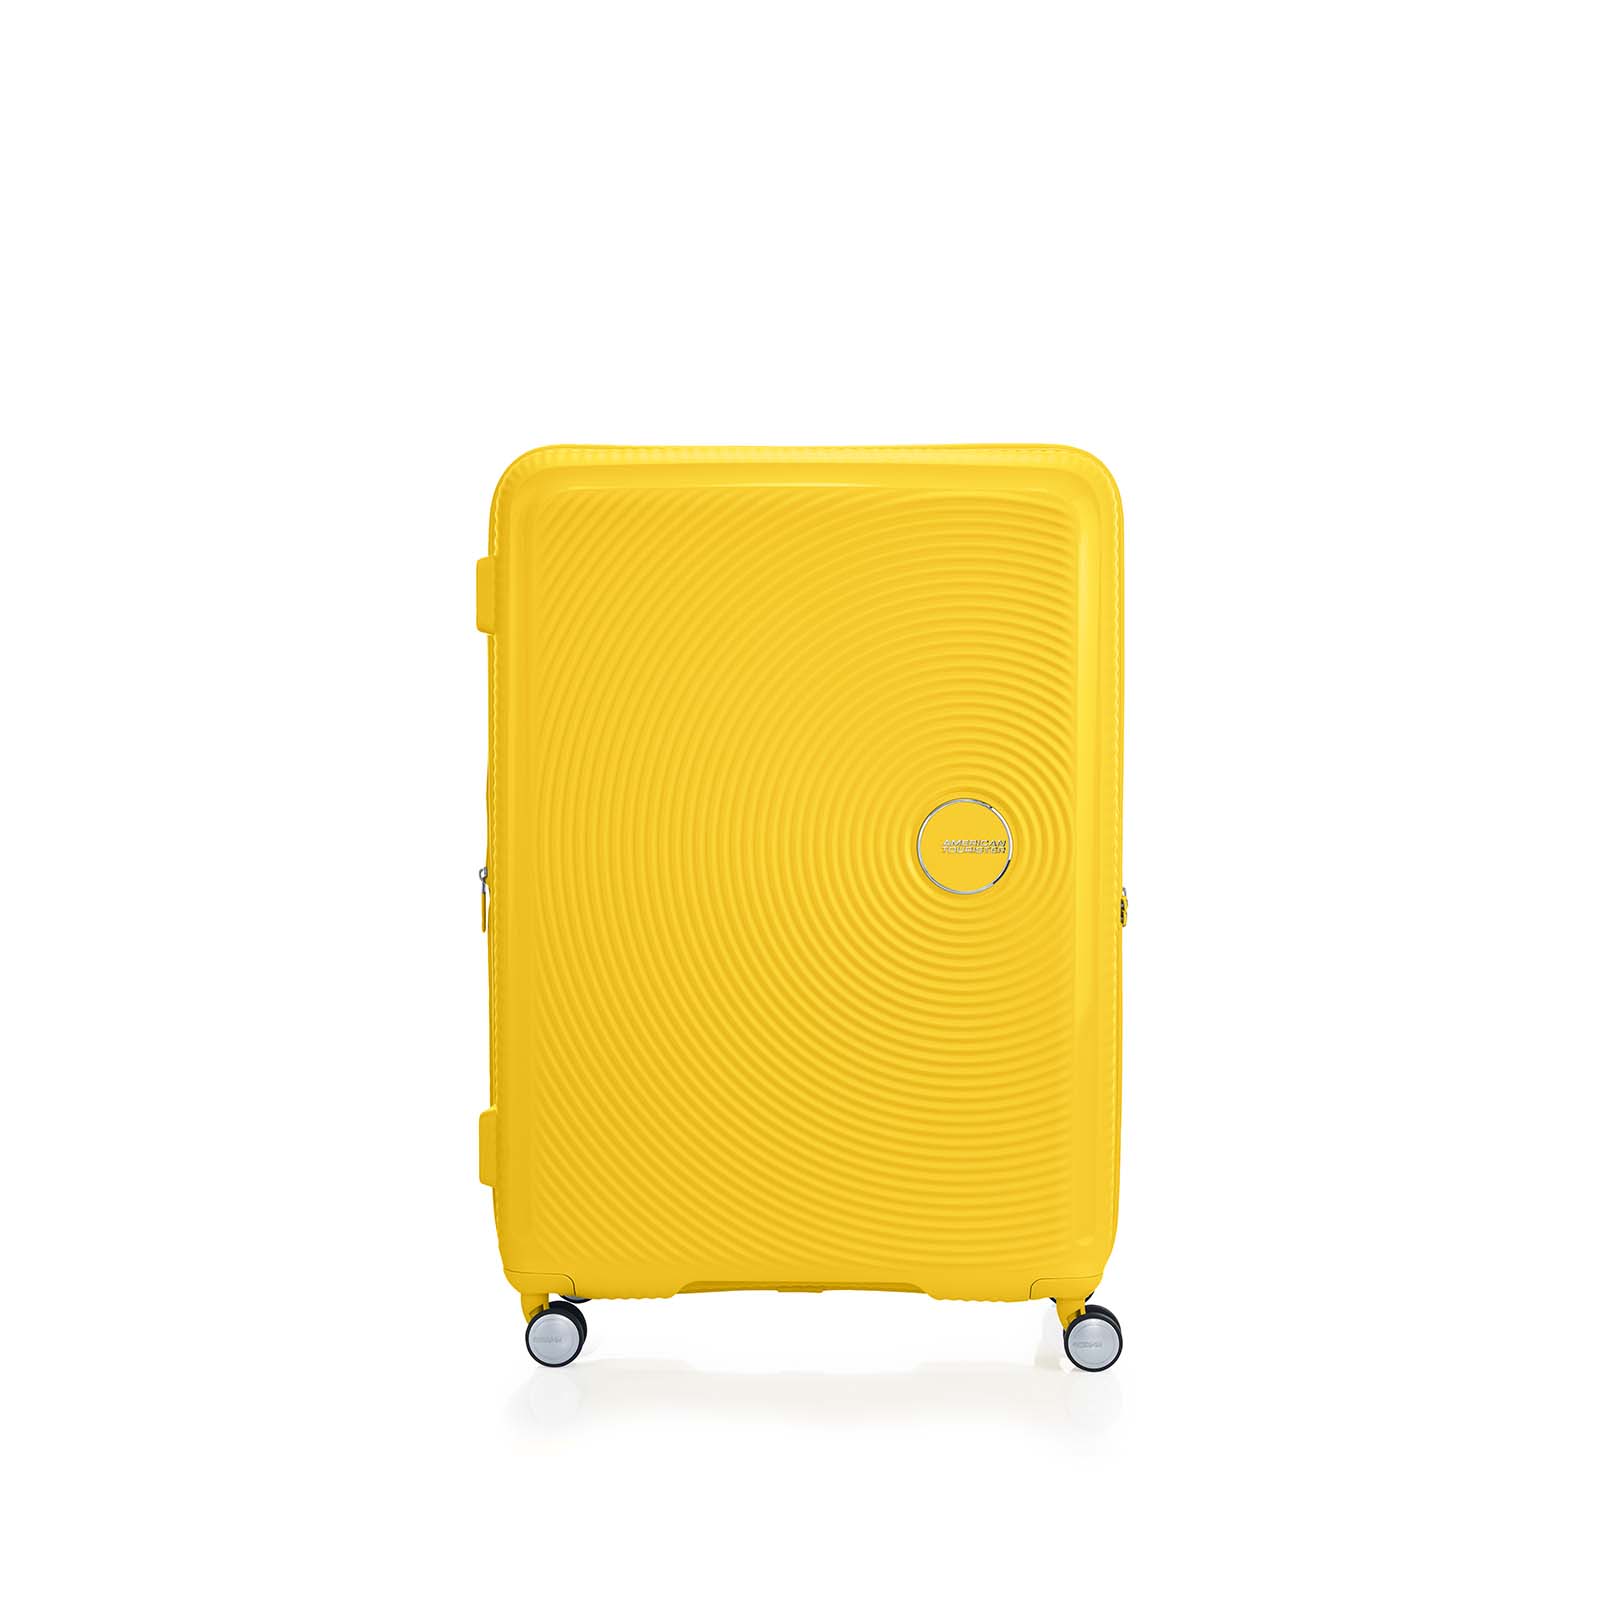 American-Tourister-Curio-2-80cm-Suitcase-Golden-Yellow